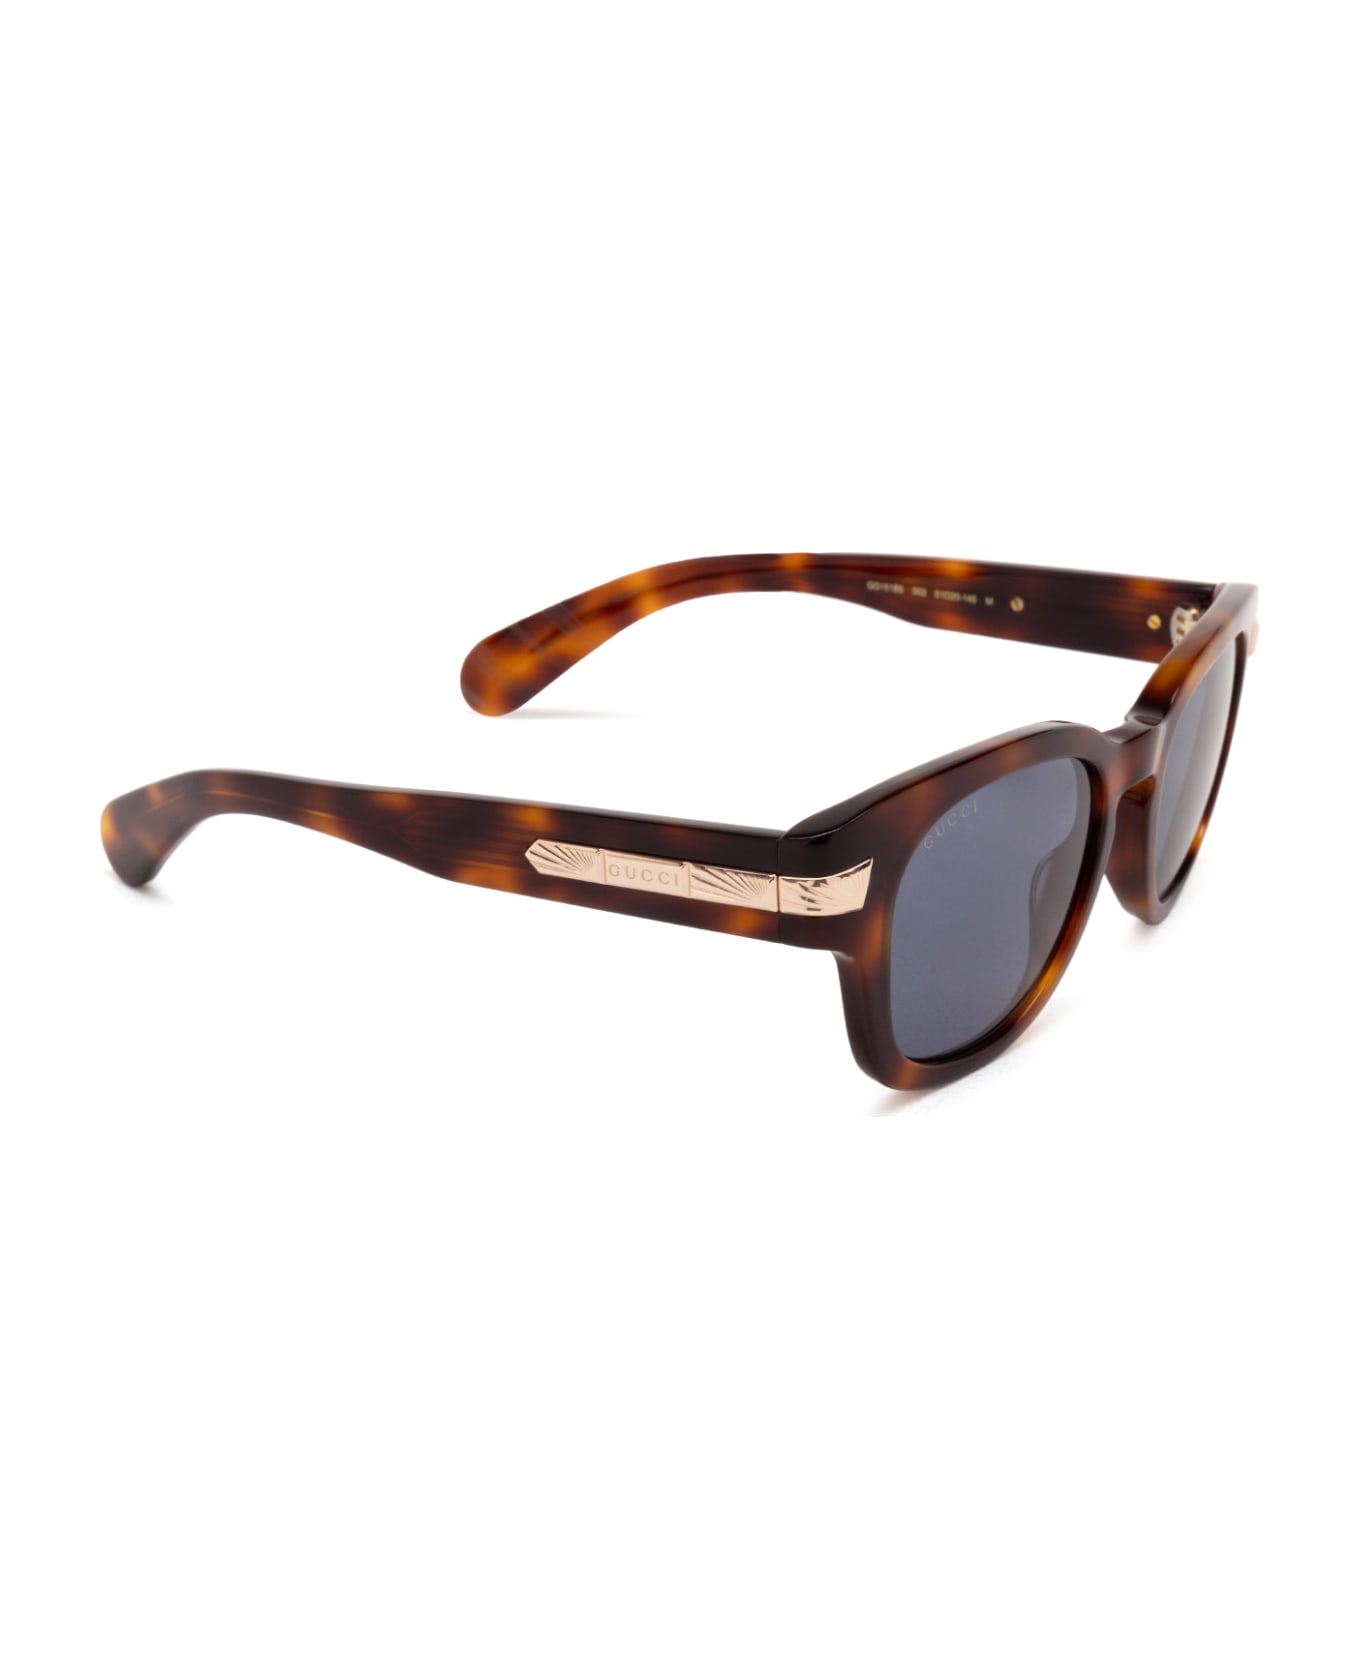 Gucci Eyewear Gg1518s Havana Sunglasses - Havana